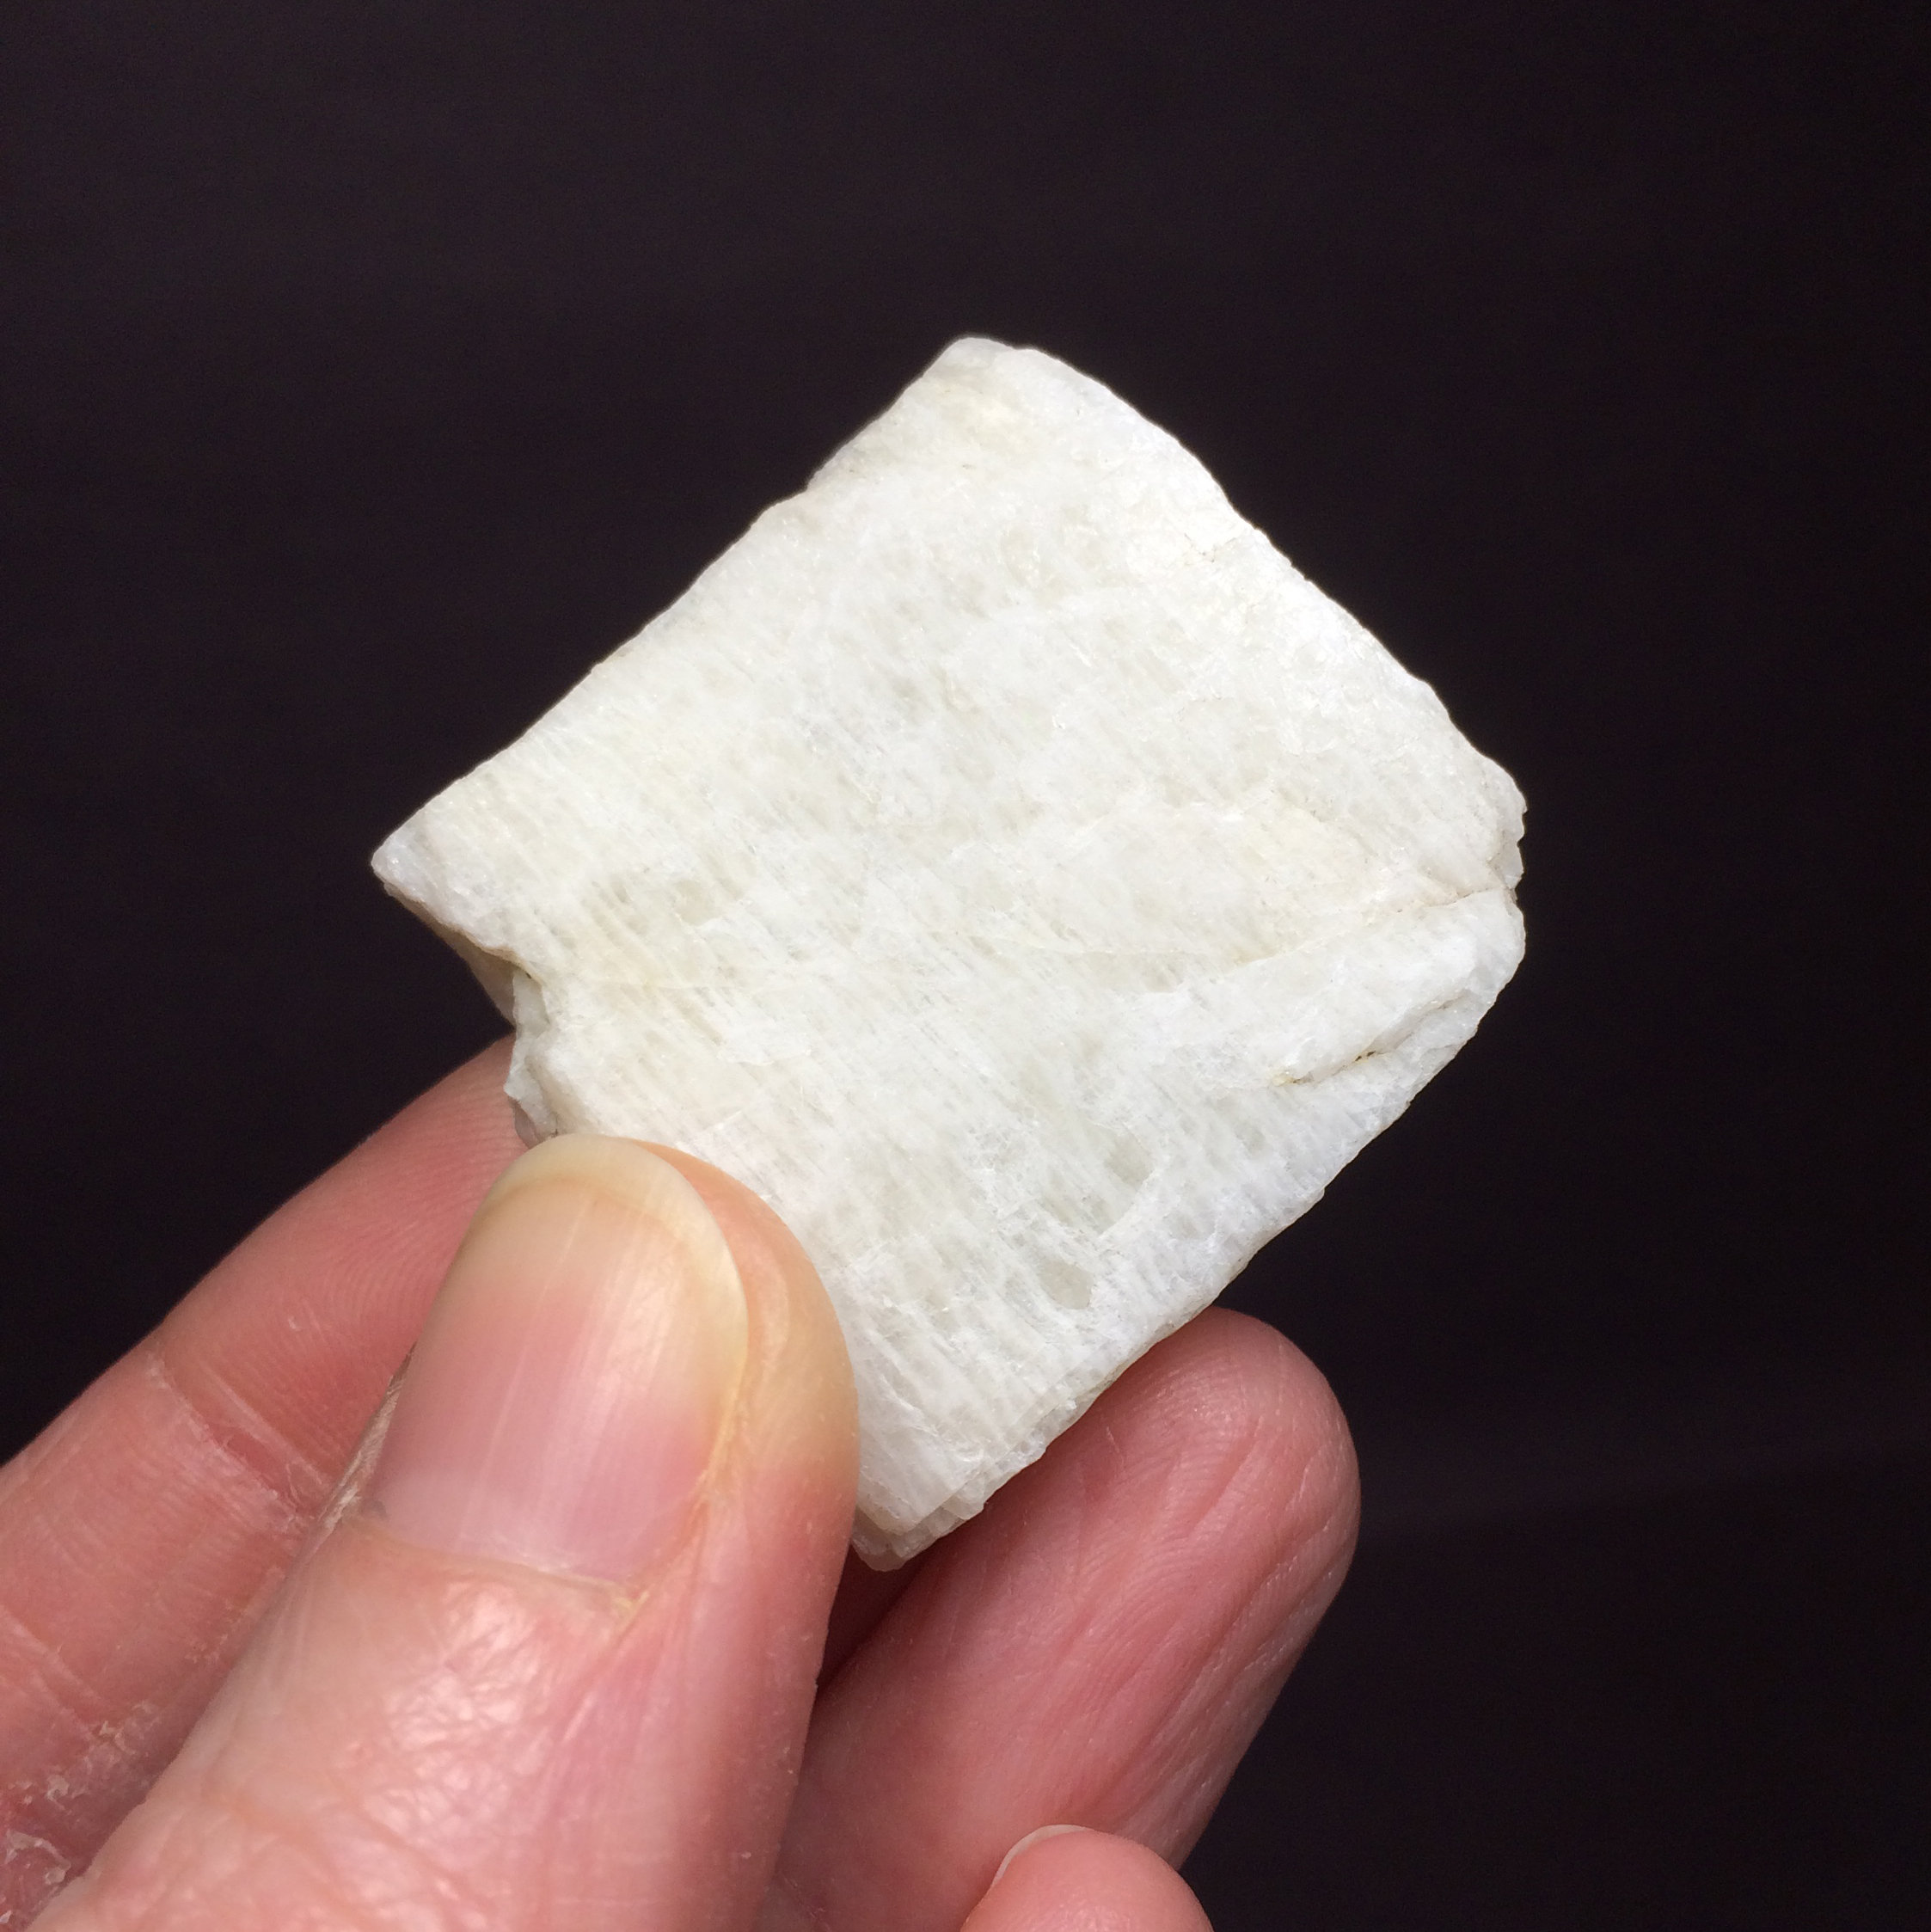 Moonstone Crystal 1.5" - Rough Stone - Raw Specimen - Natural Mineral - Healing Crystal - Meditation Crystal - From North Carolina - 31g